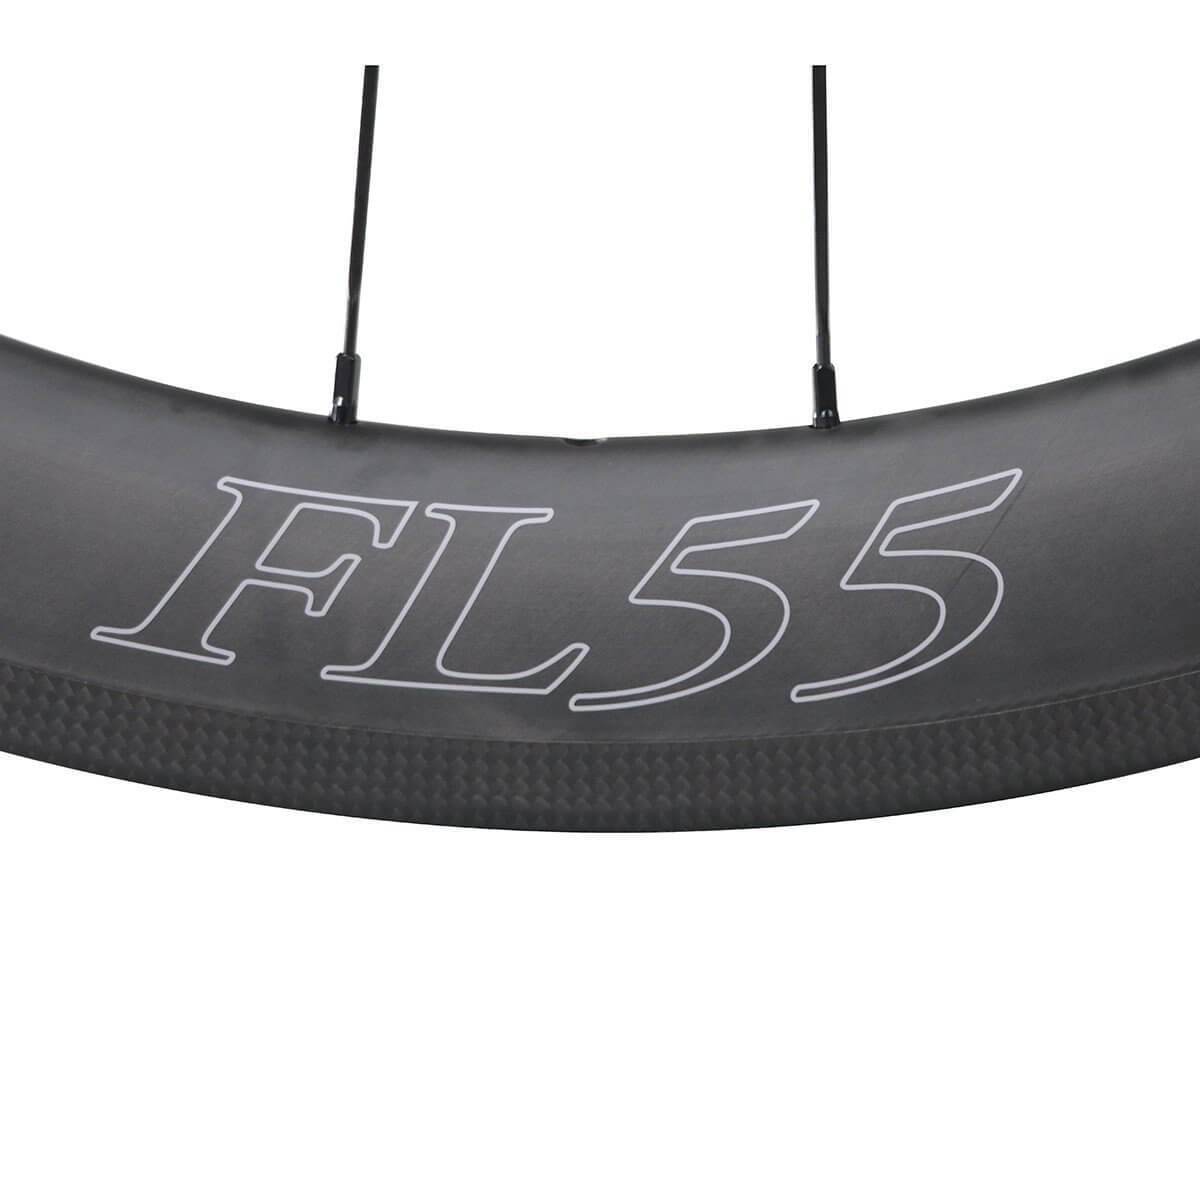 Wheels & Wheelsets - FL55